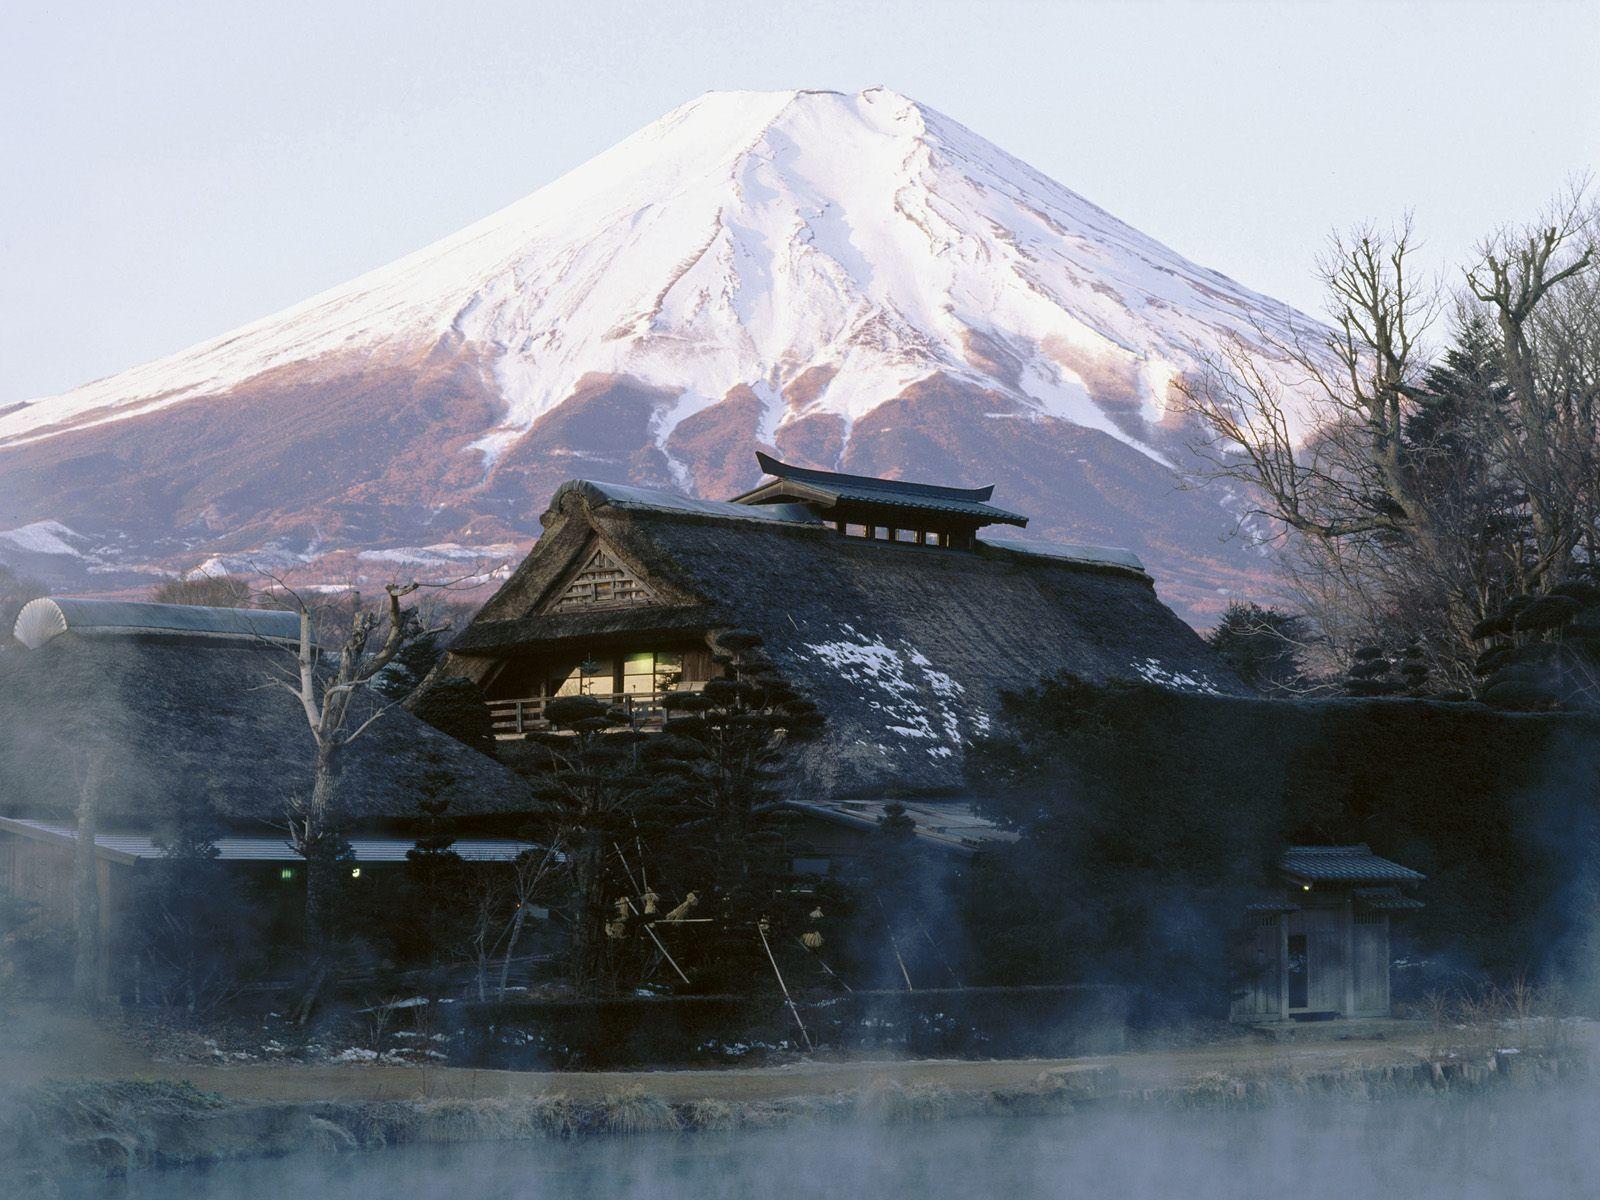 Mount Fuji Japan Travel photo and wallpaper